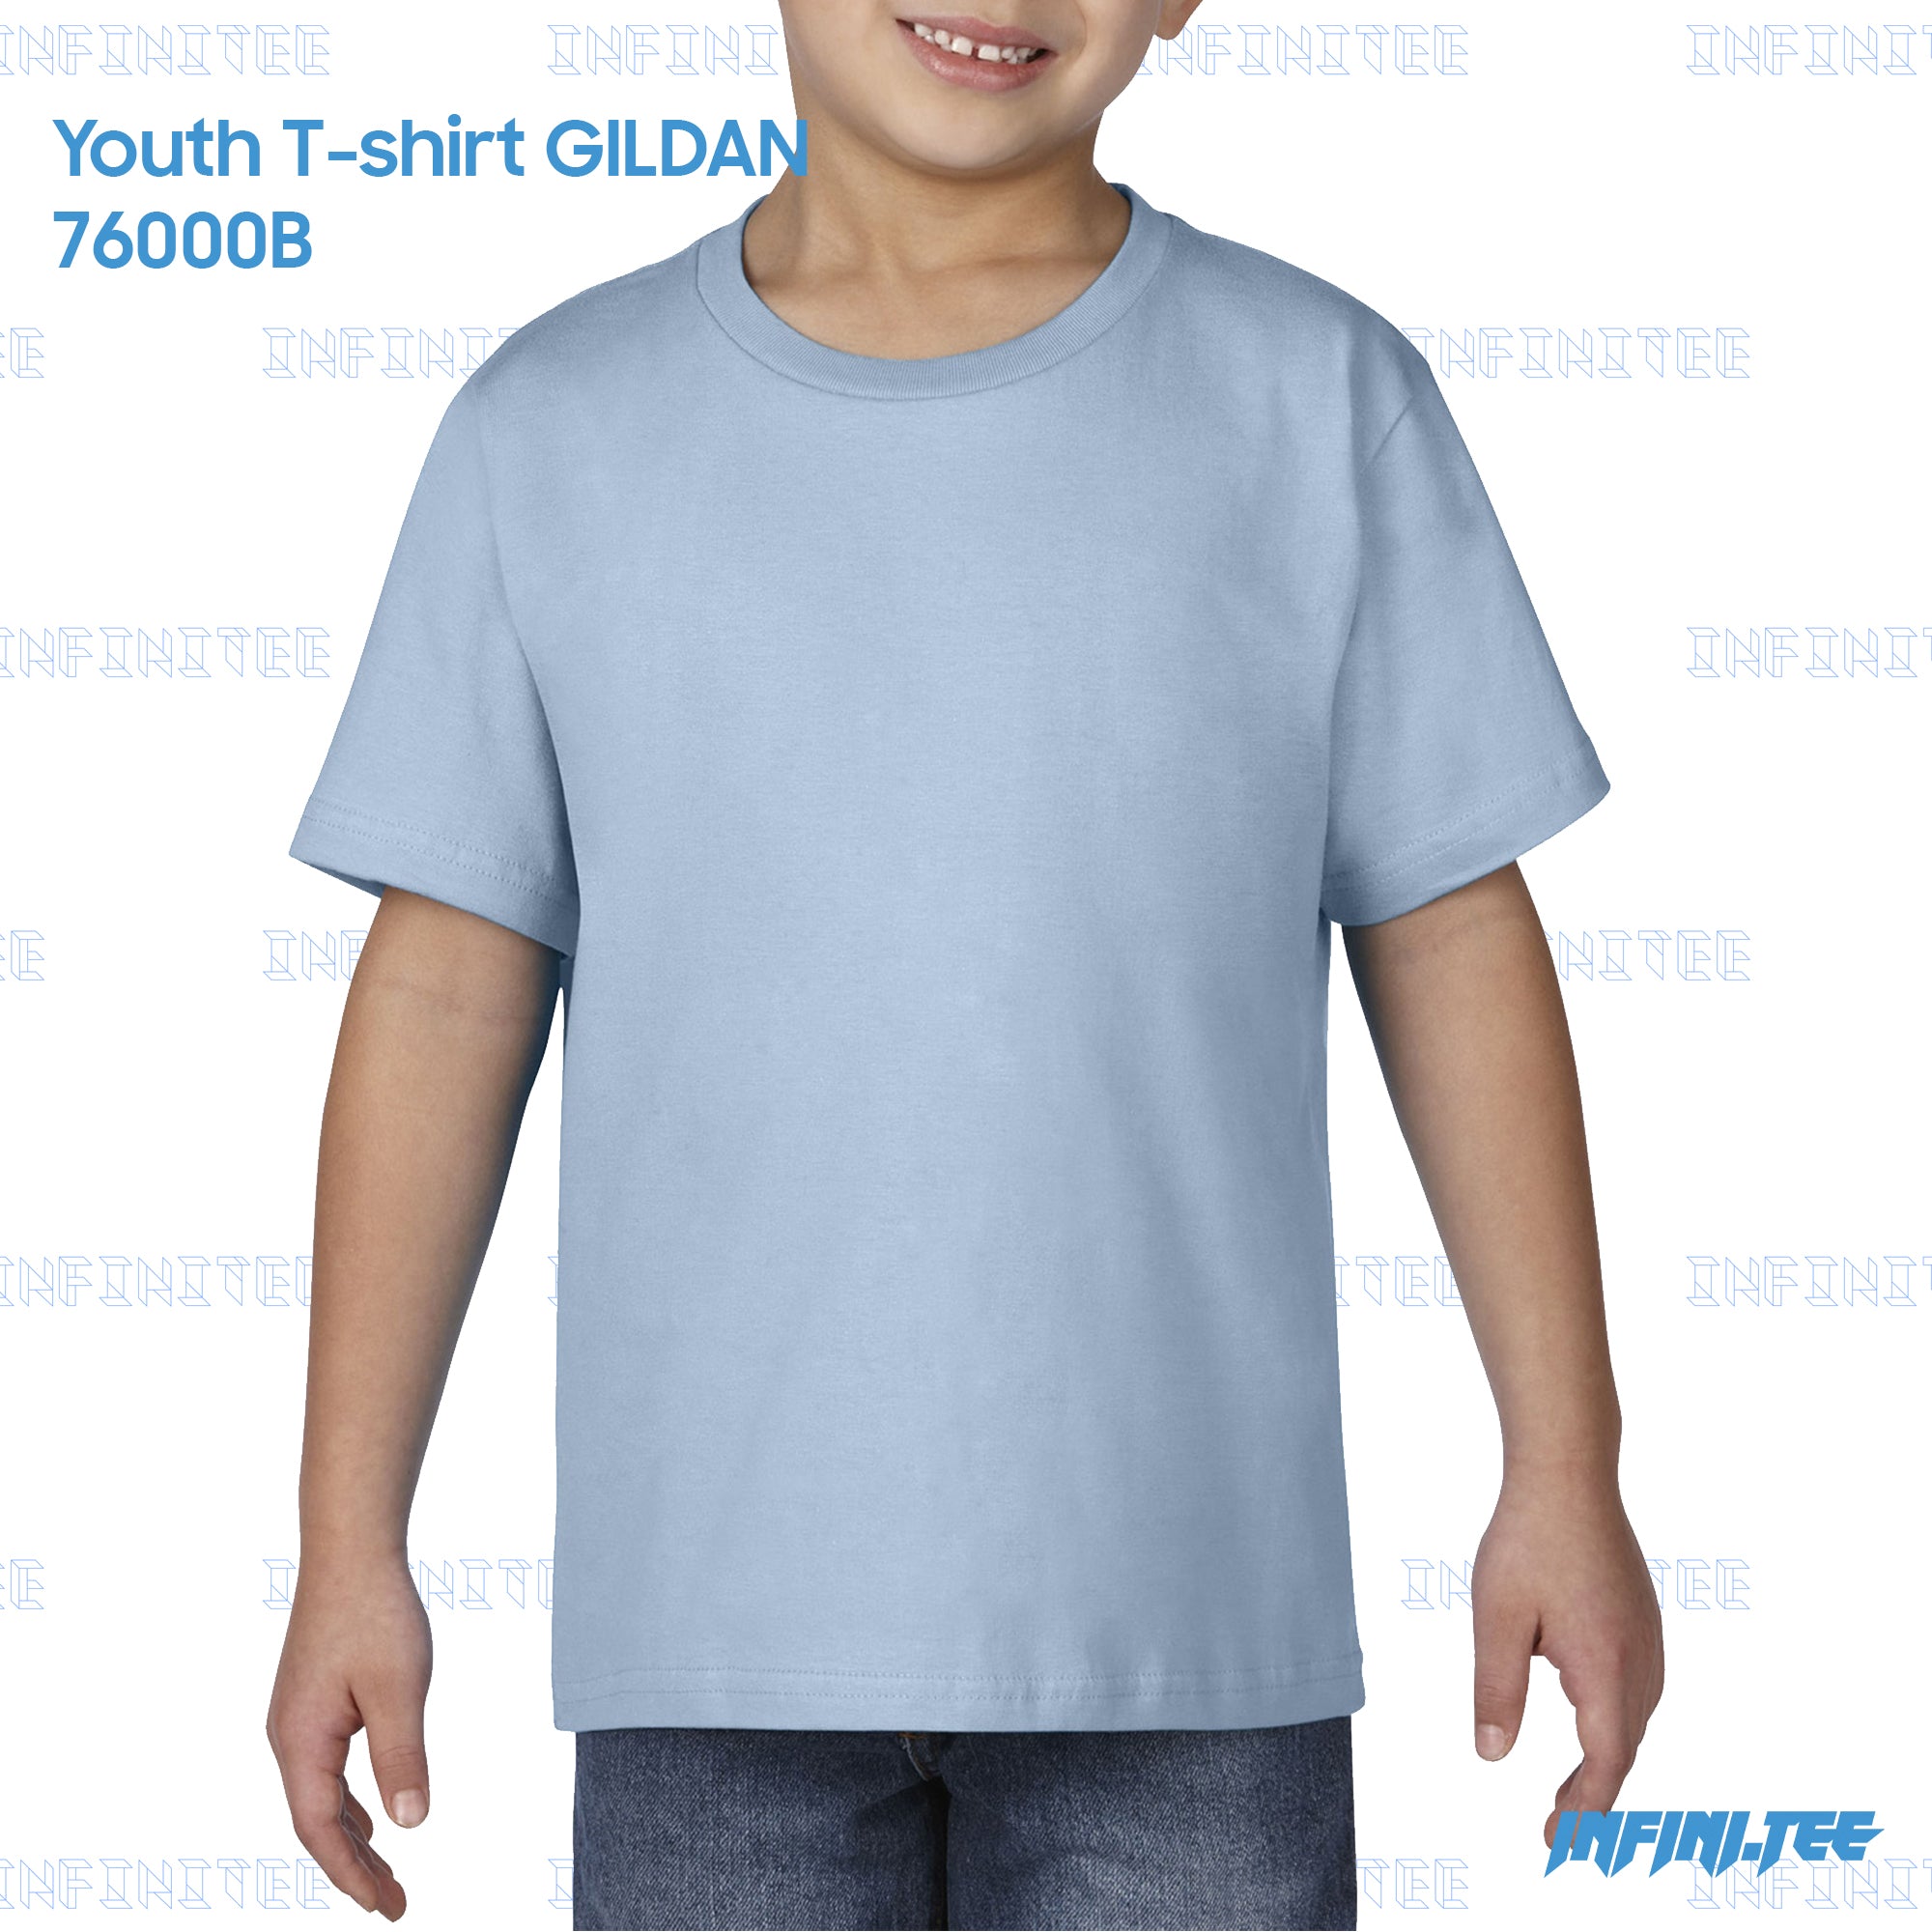 Youth T-shirt 76000B GILDAN - LIGHT BLUE